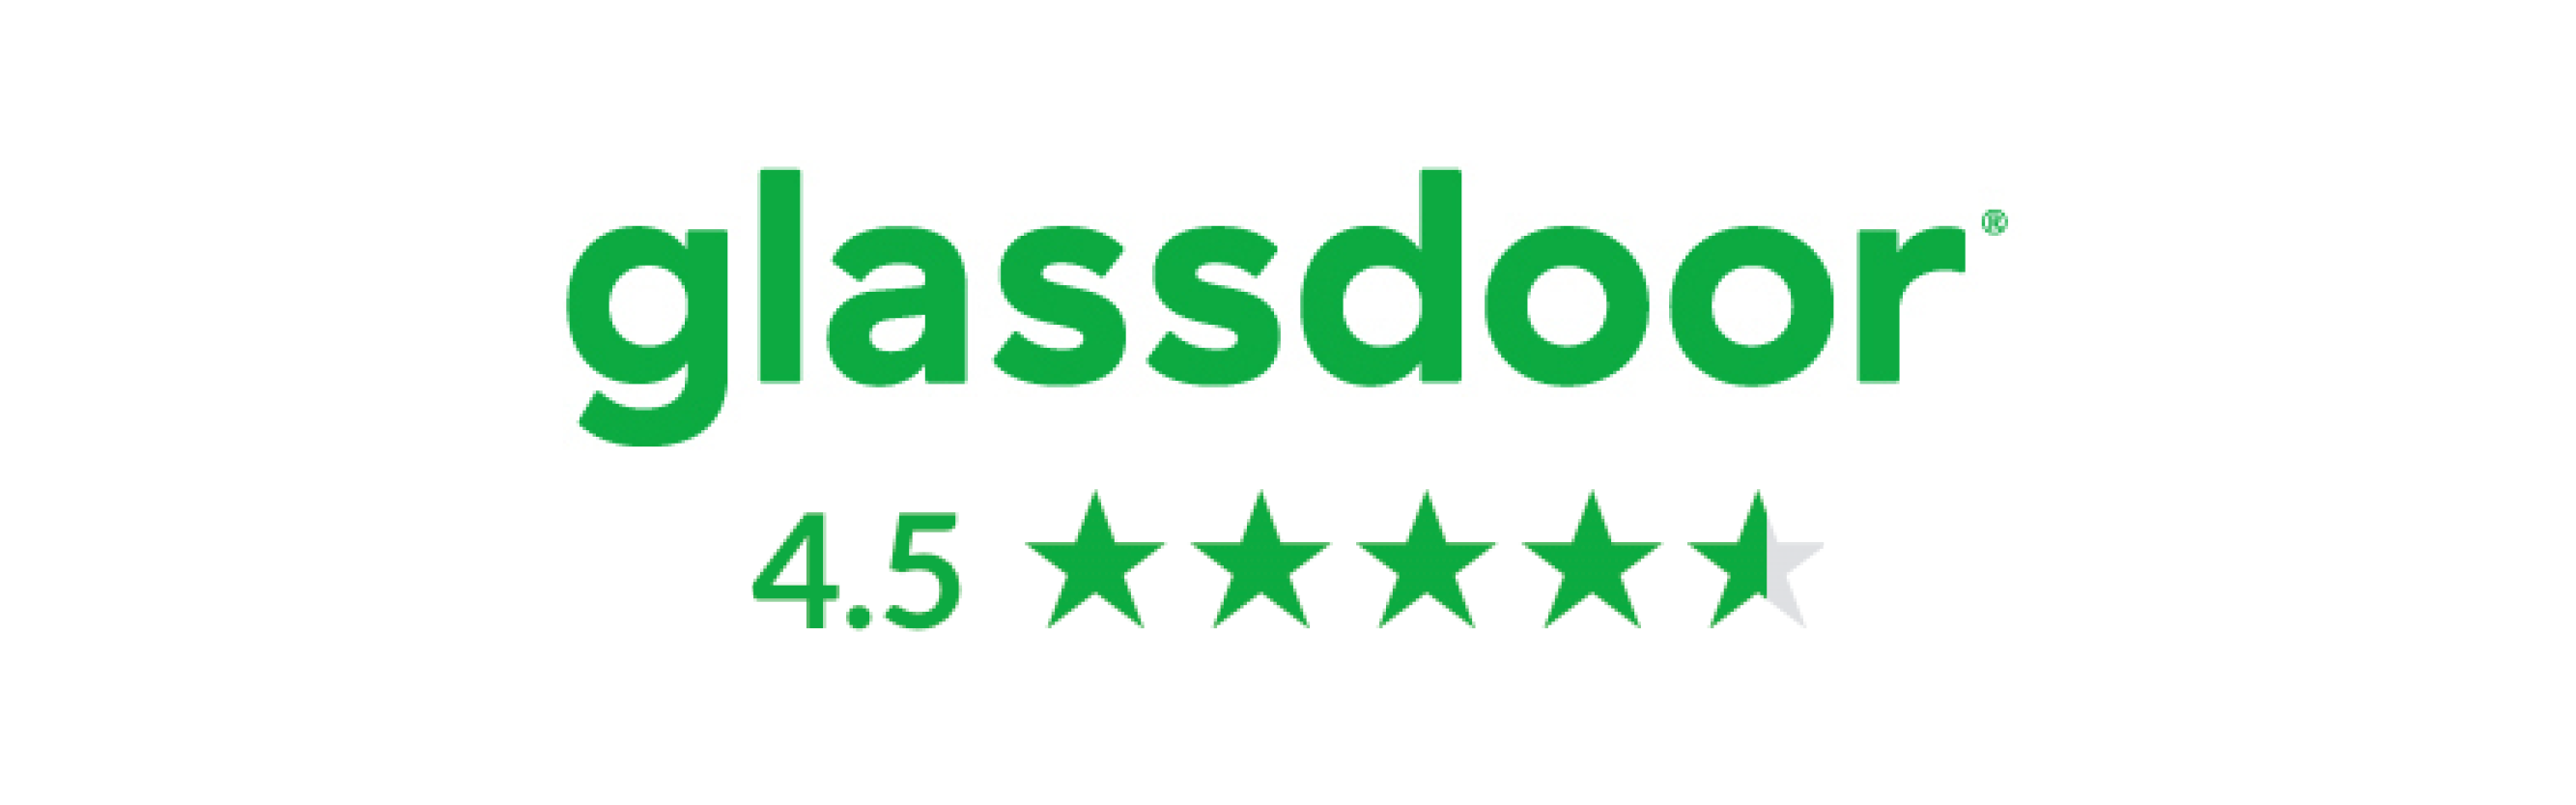 Glassdoor logo and rating of 4.5 stars